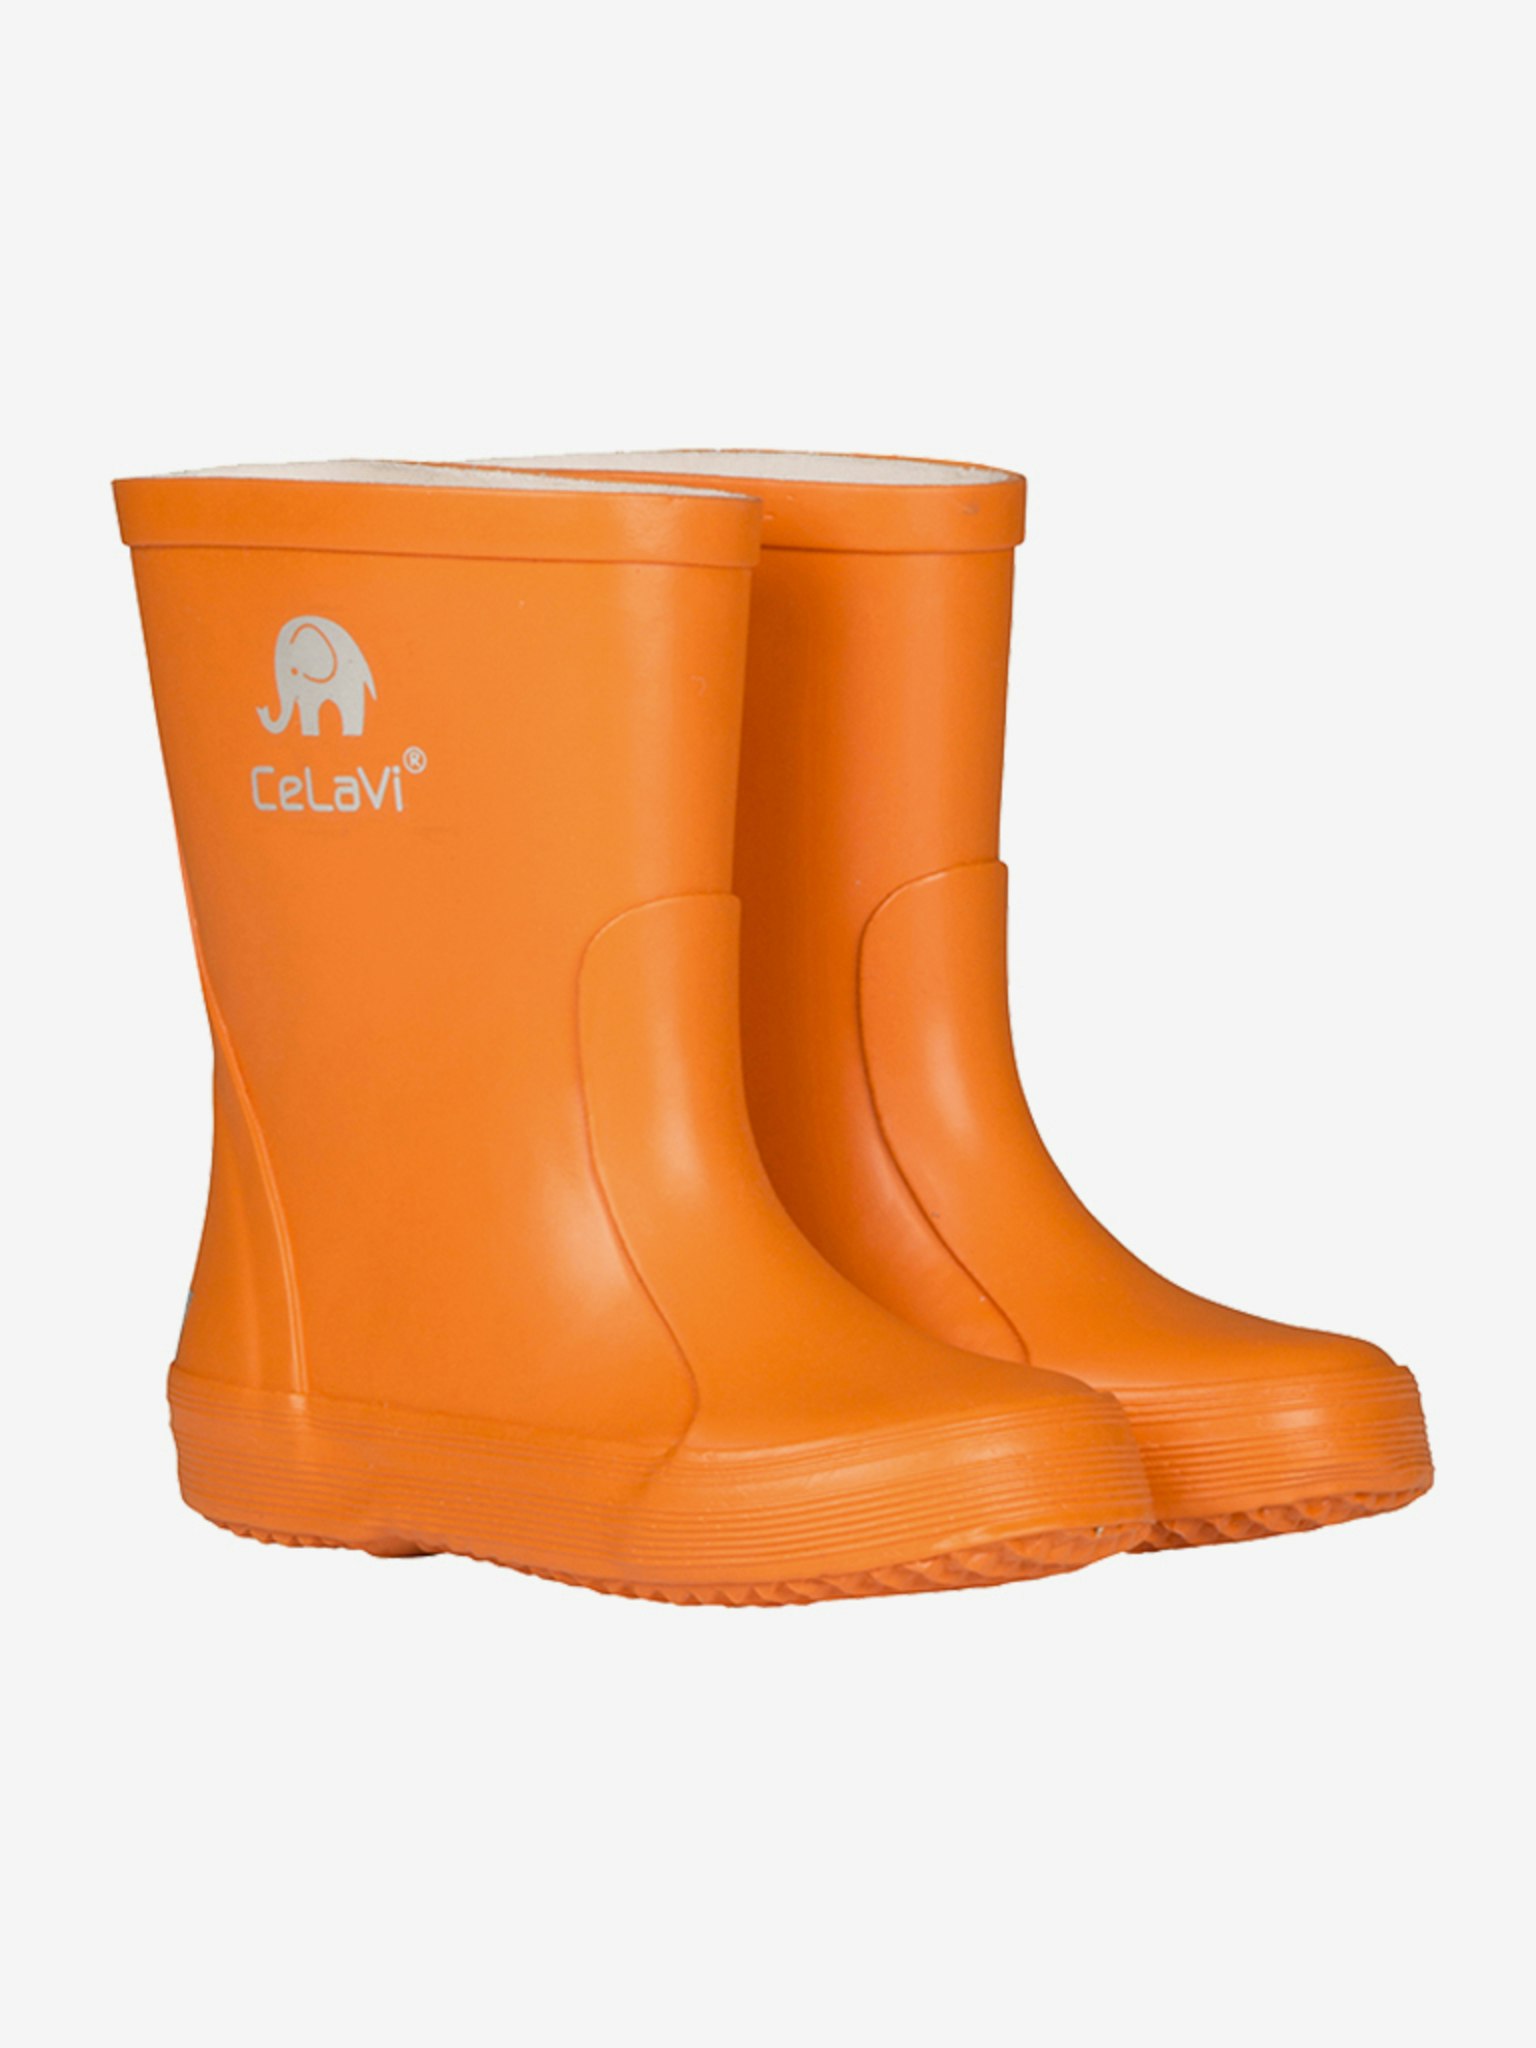 CeLaVi - Basic Wellies -Solid/ Gummistövlar- Orange